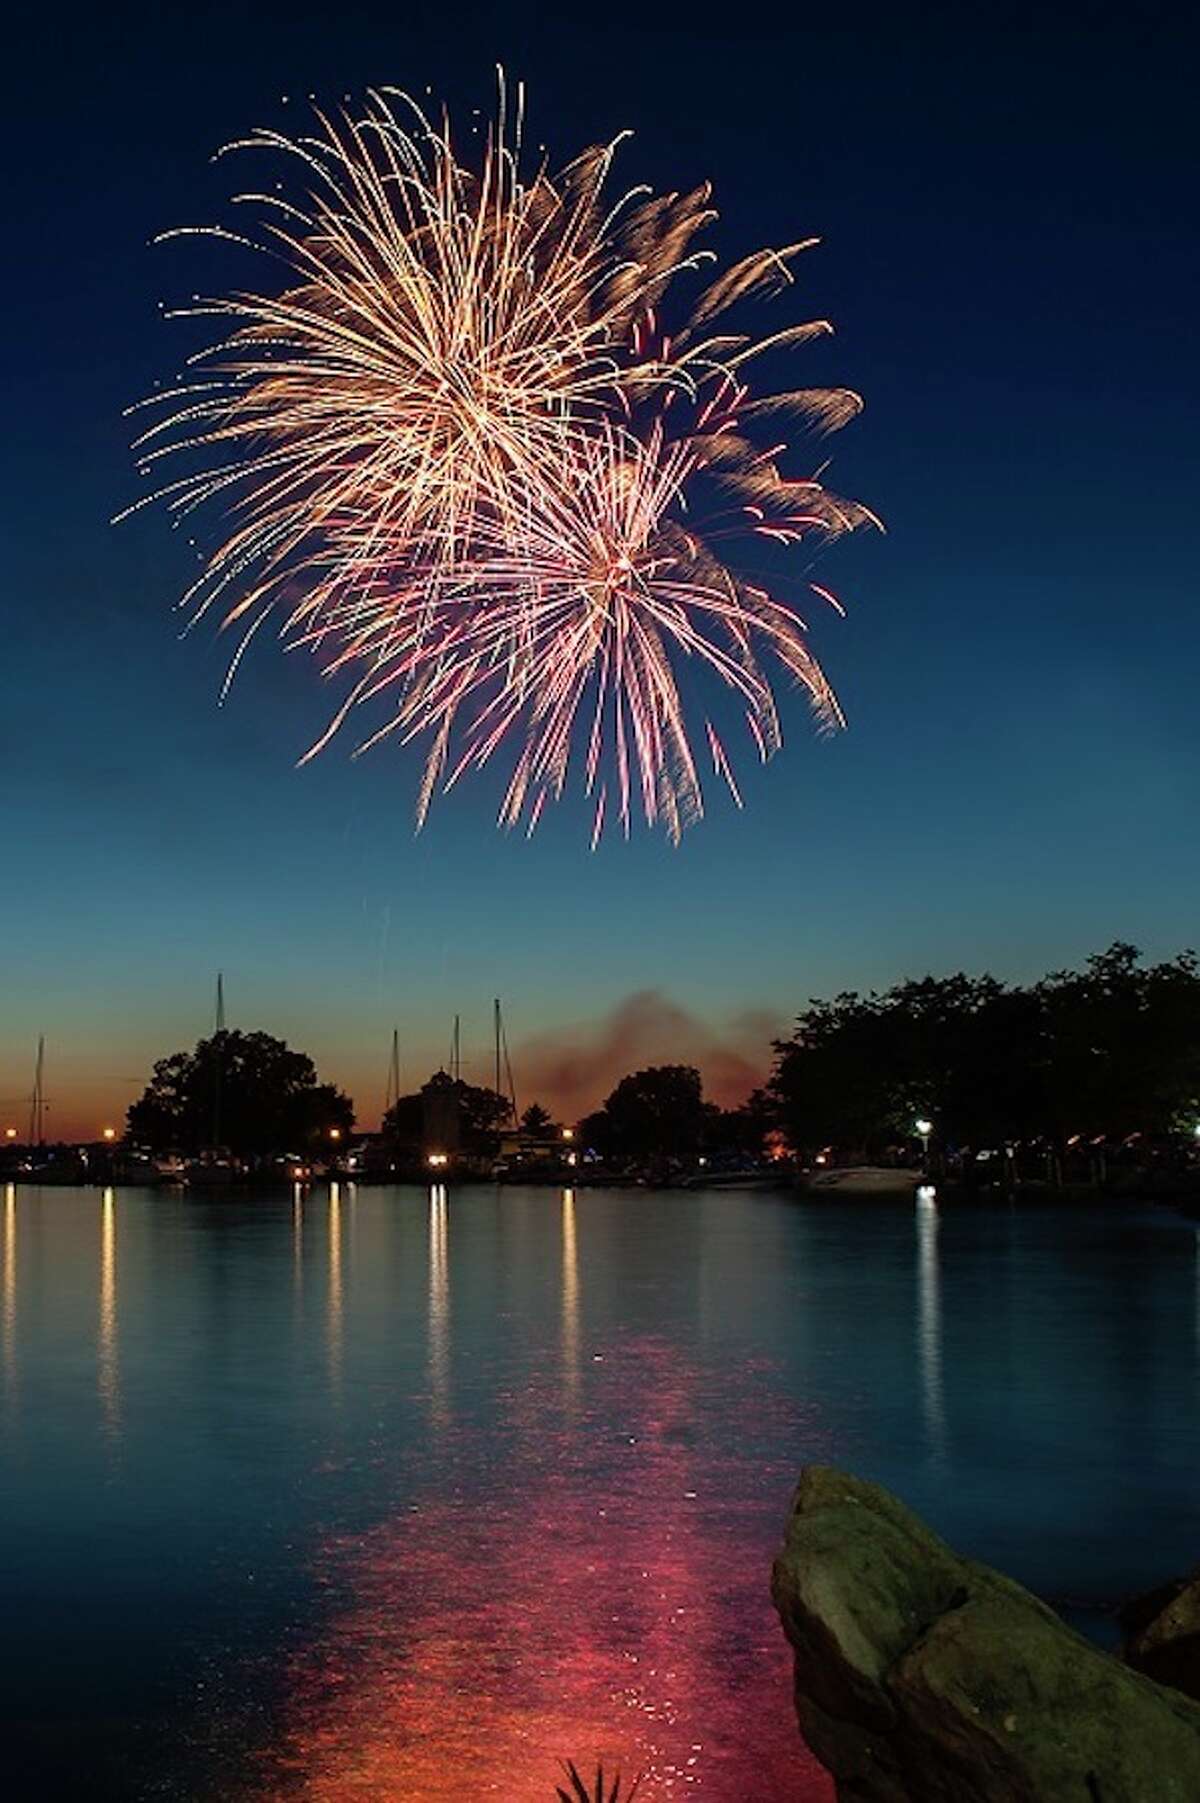 Big Rapids fireworks show cancelled